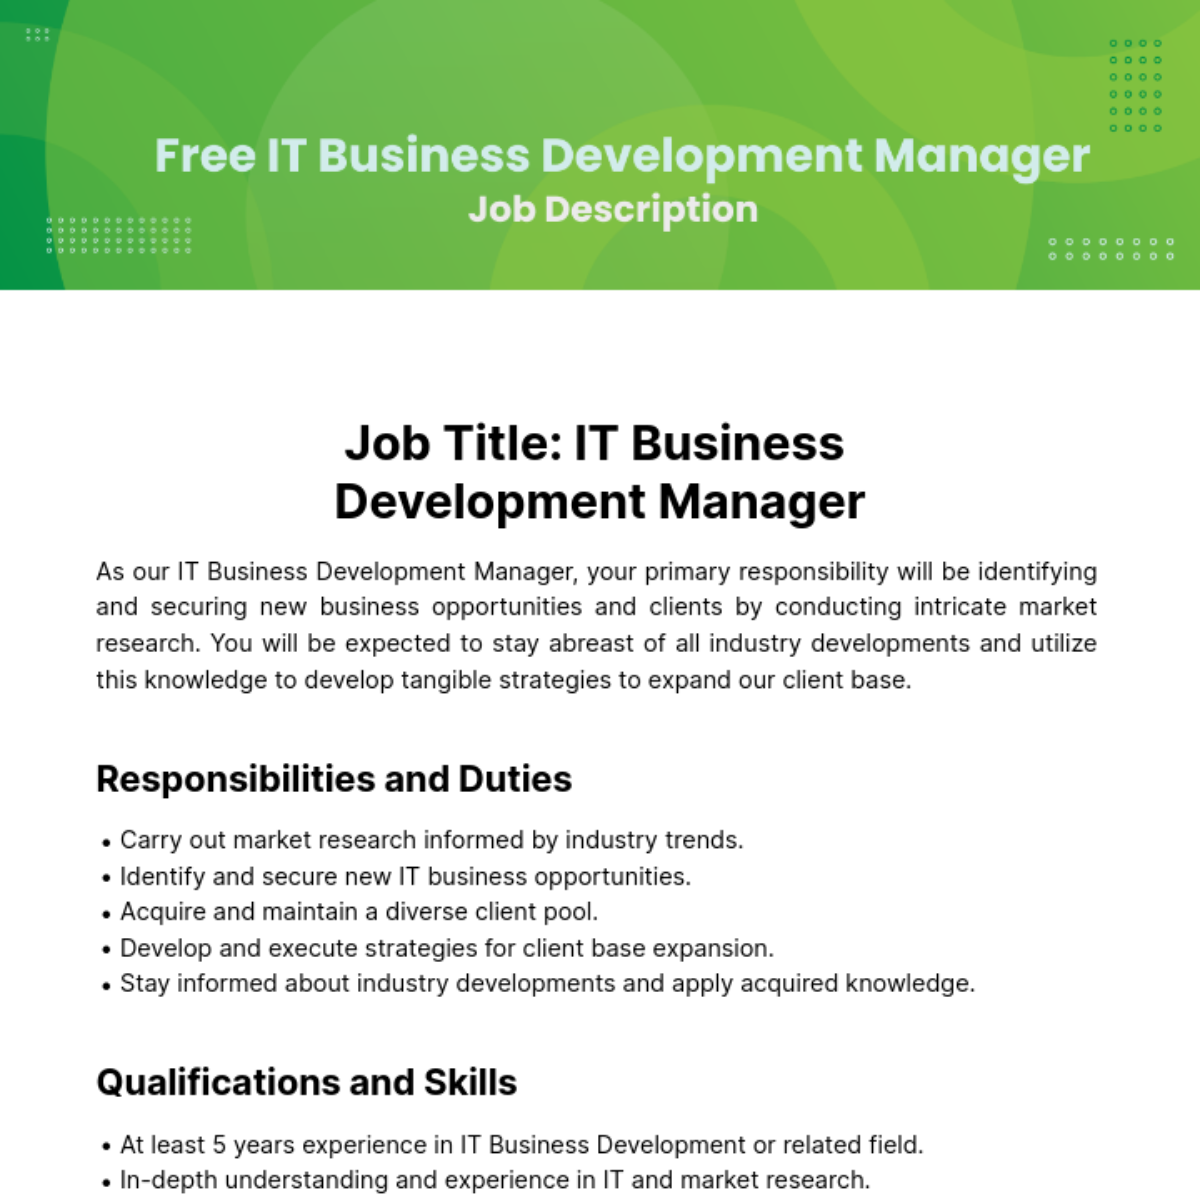 Free IT Business Development Manager Job Description Template